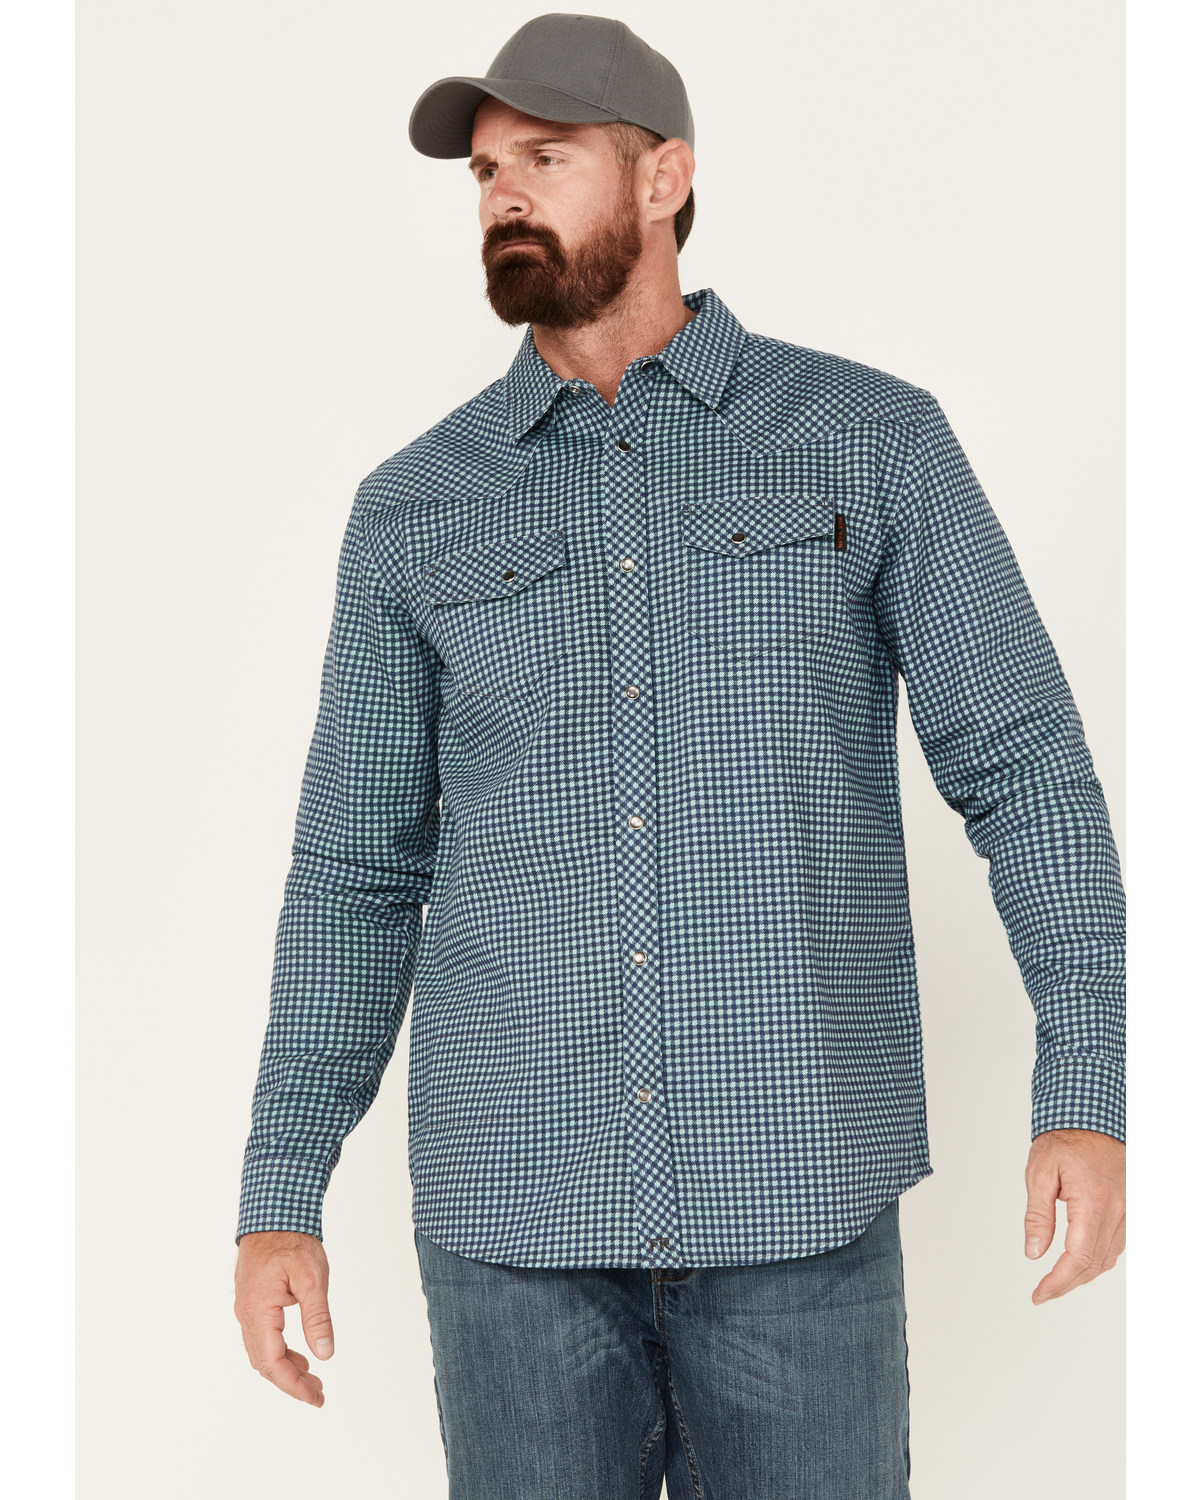 Cody James Men's FR Mid Weight Geo Print Long Sleeve Snap Western Shirt - Big & Tall